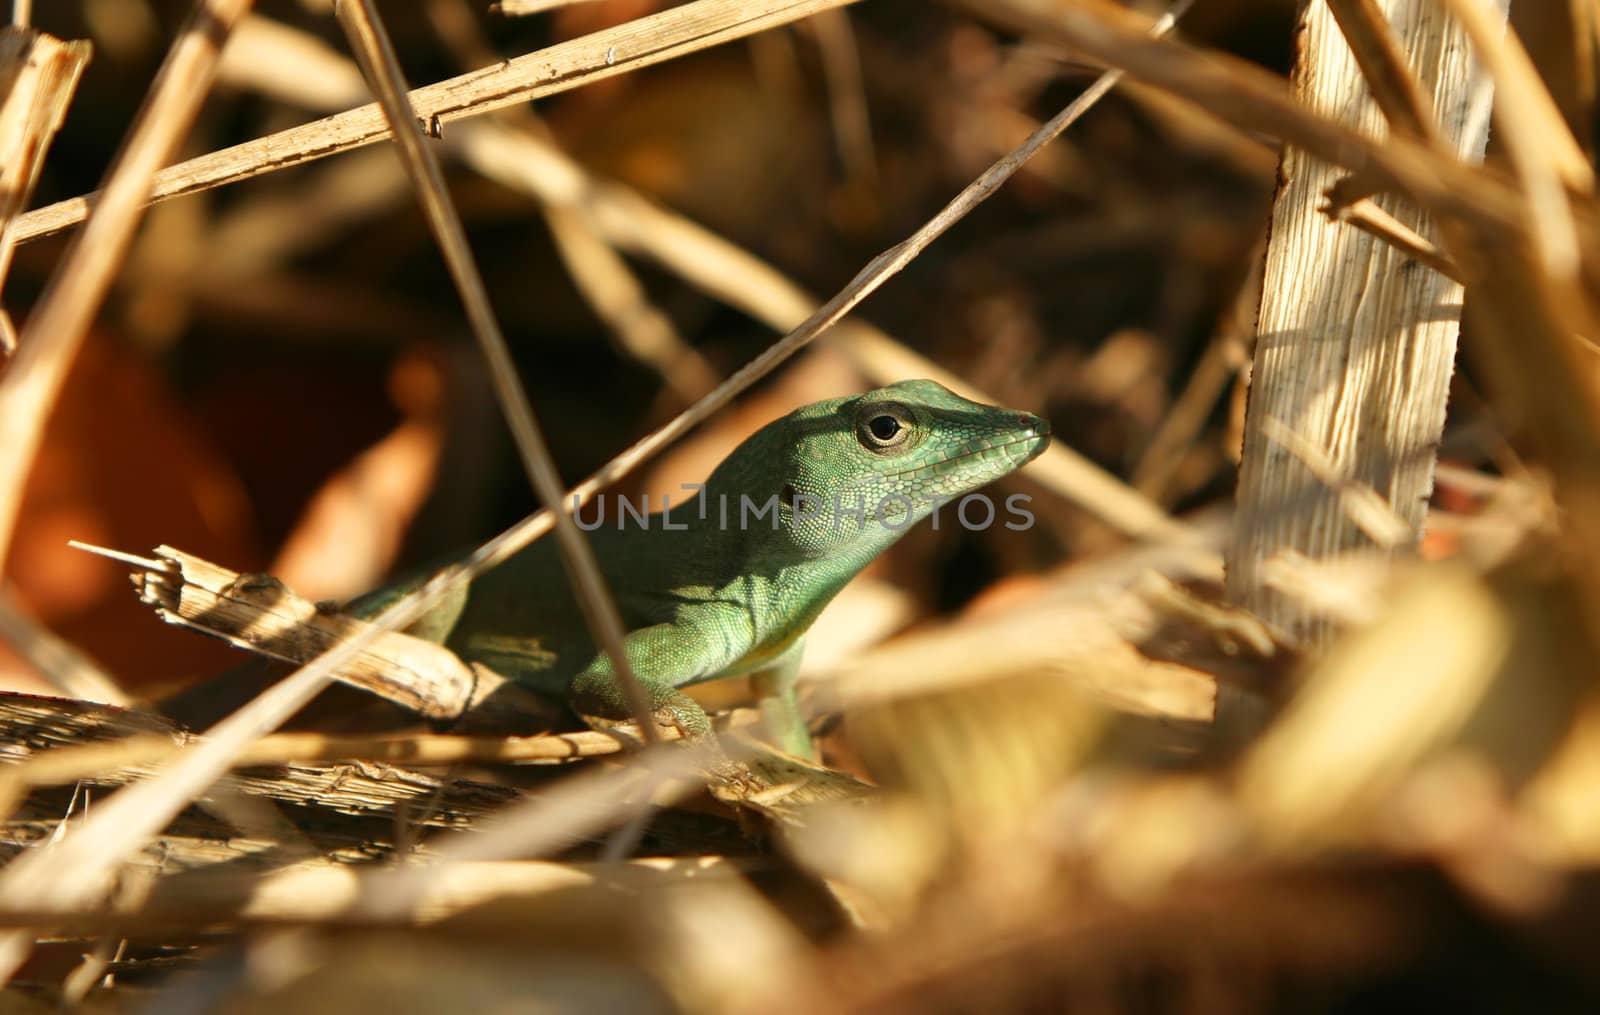 A closeup shot of a green lizard hiding out in some vegetation.